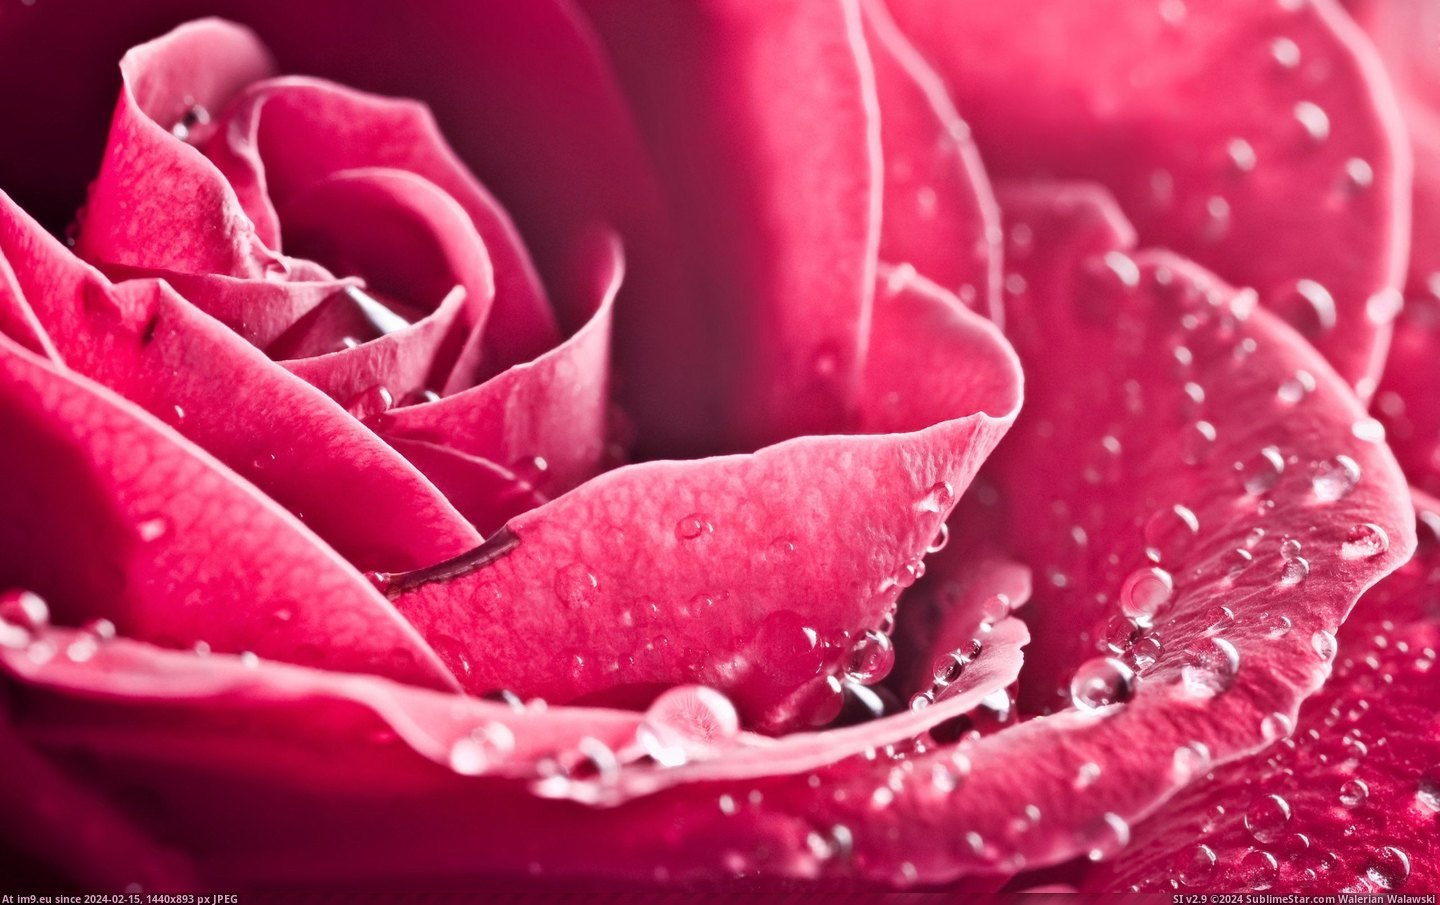 #Wallpaper #Rose #Special #Wide Special Rose Wide HD Wallpaper Pic. (Obraz z album Unique HD Wallpapers))